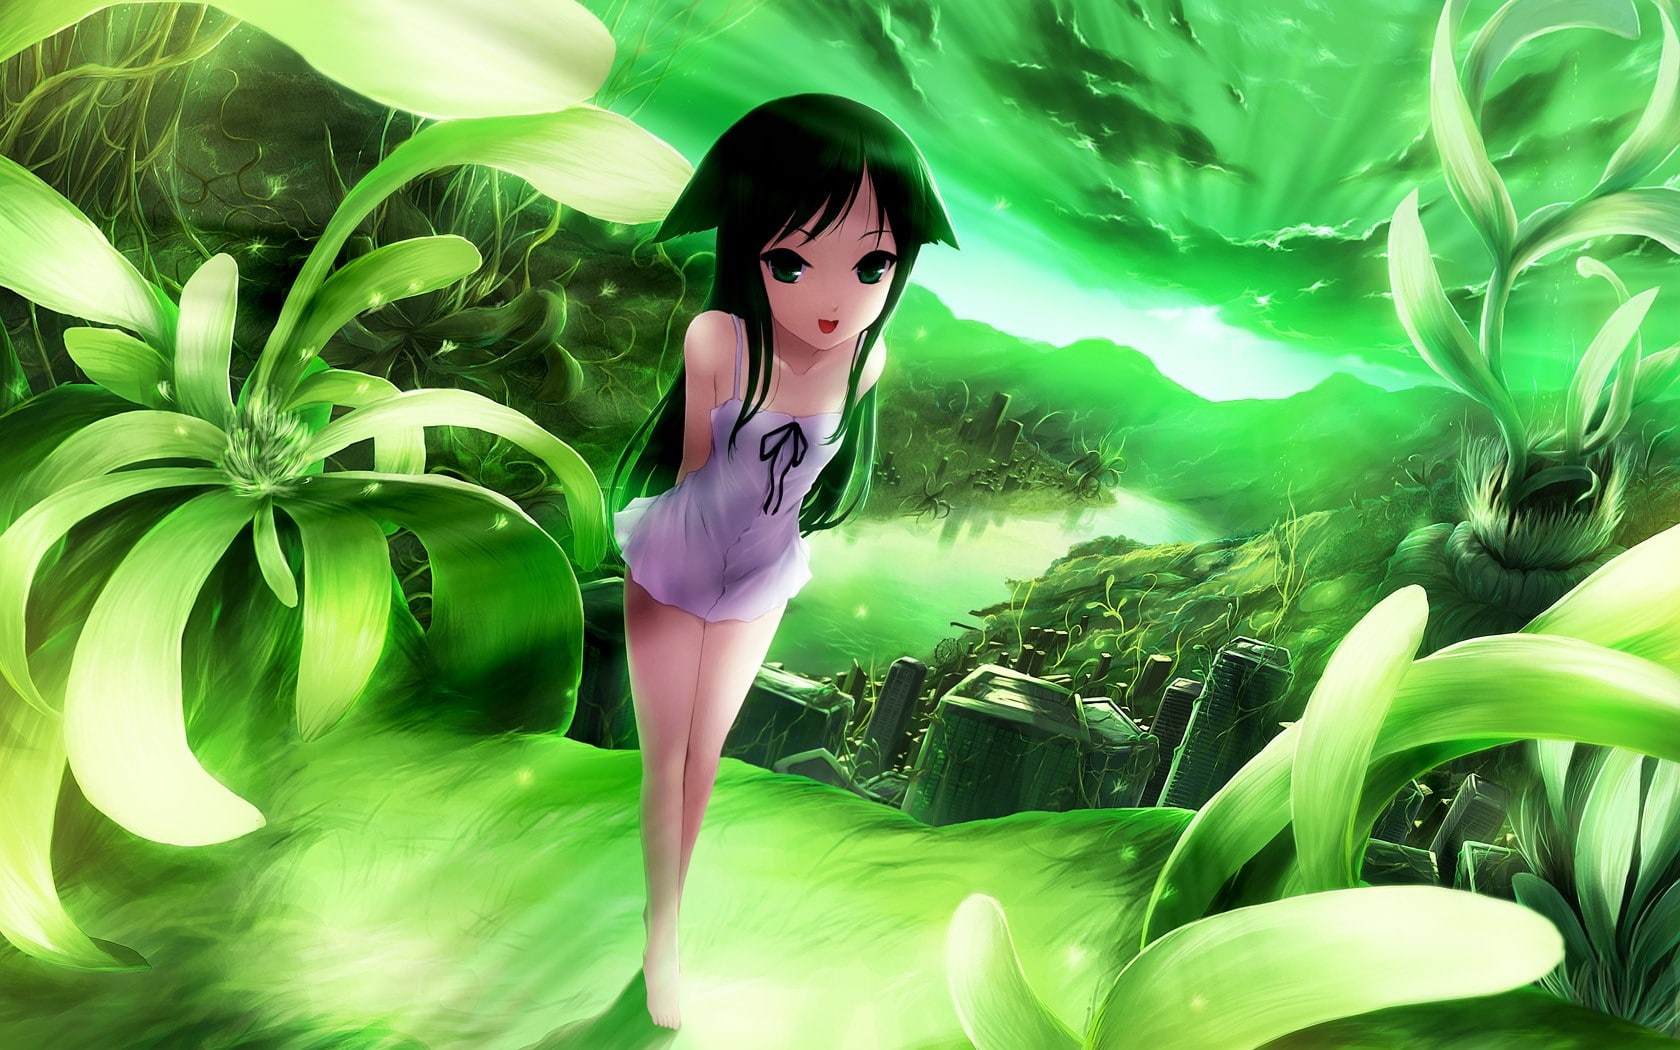 Cait, Saya no uta, Dress, Plants, Green background, one person